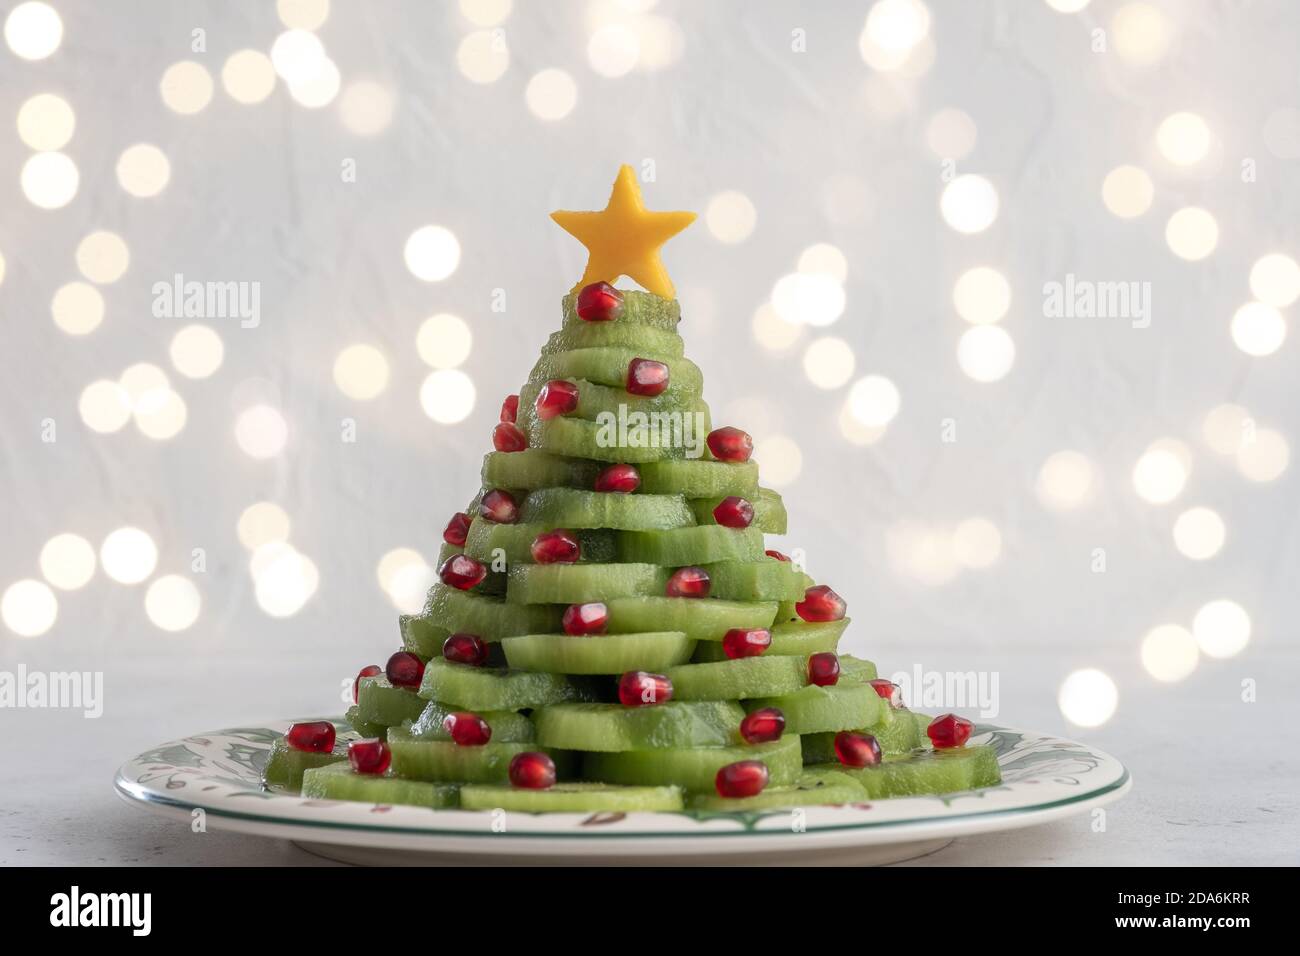 Christmas tree fruit salad Stock Photo